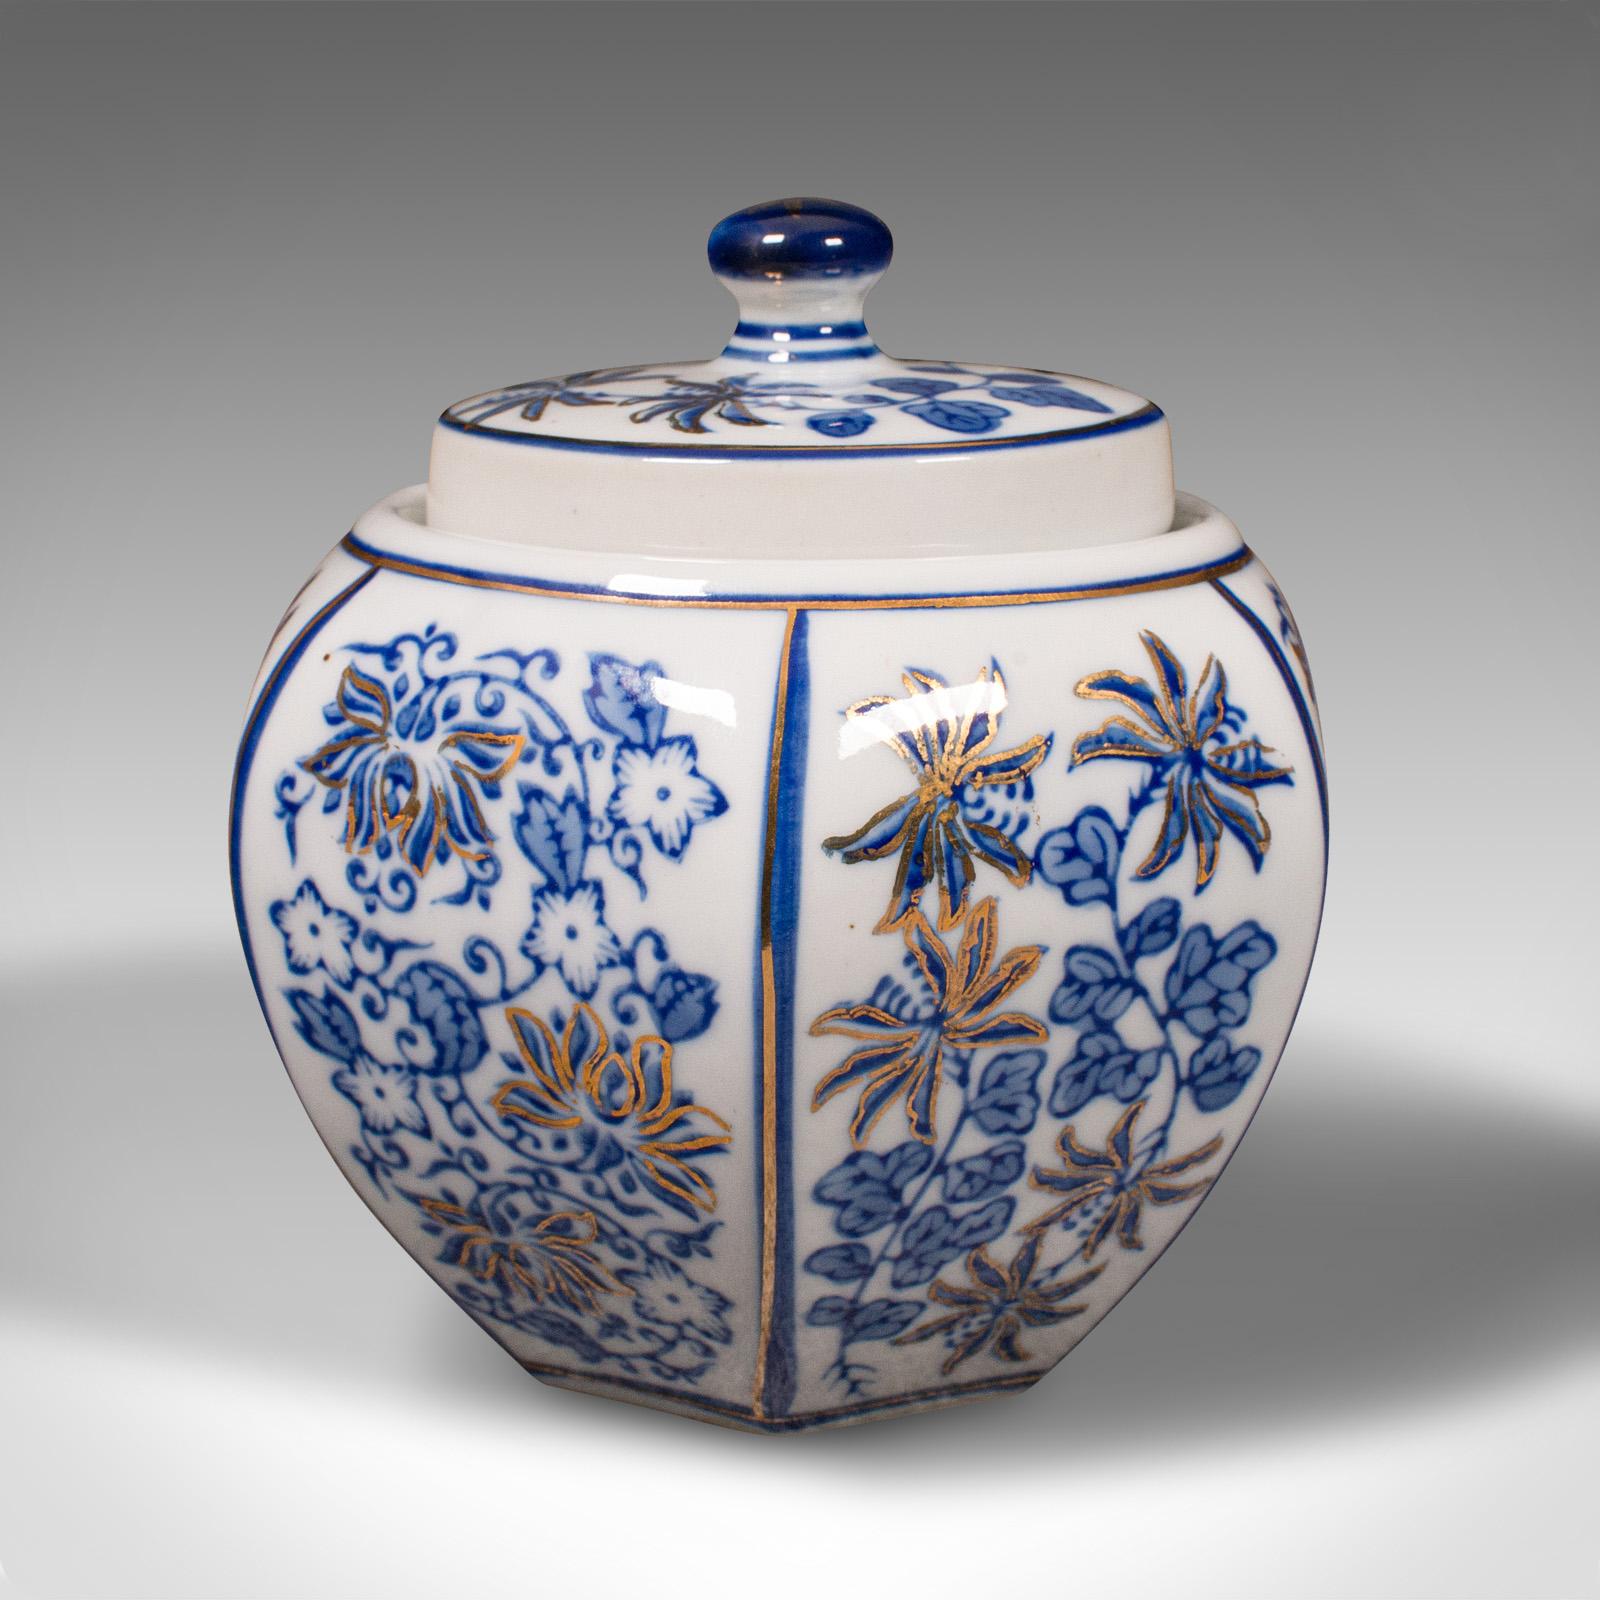 Vintage Blue and White Spice Jar, Chinese, Ceramic, Decorative Pot, Art Deco For Sale 1